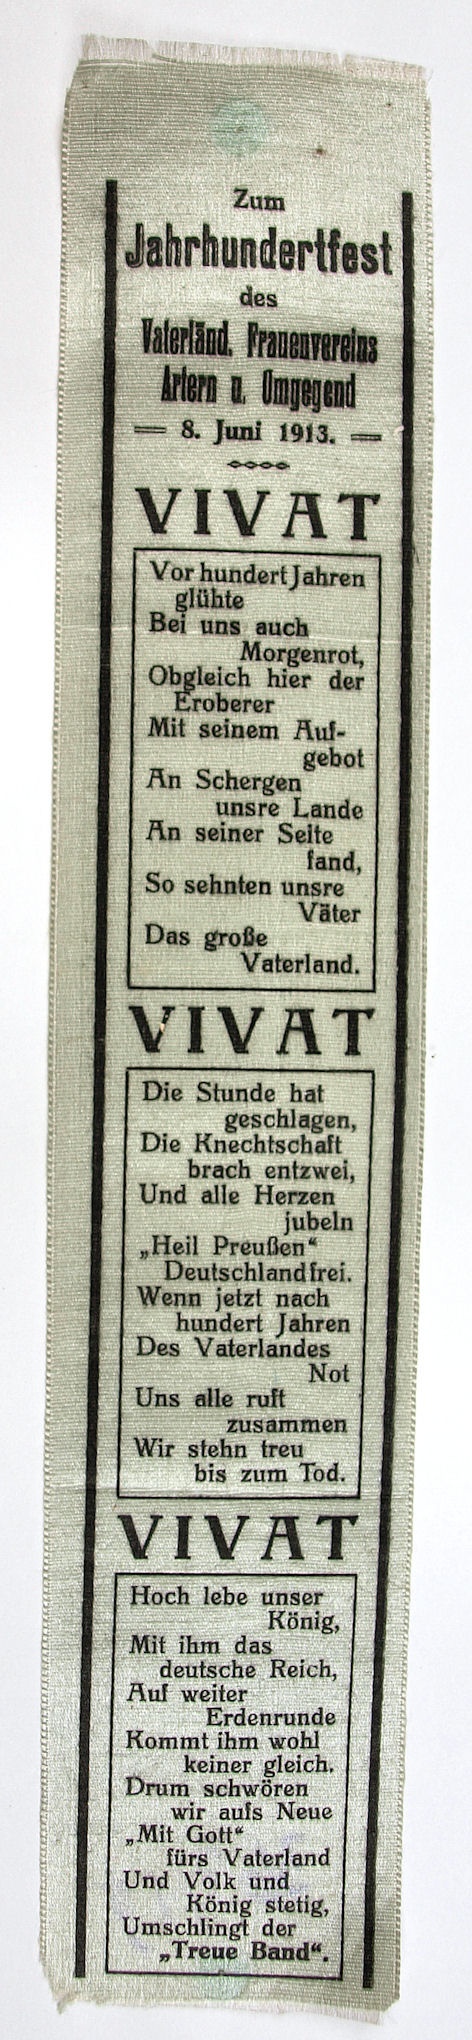 Vivatband zum Jahrhundertfest des Vaterländ. Frauenvereins Artern und Umgebung  8. Juni 1913 (Museum Weißenfels - Schloss Neu-Augustusburg CC BY-NC-SA)